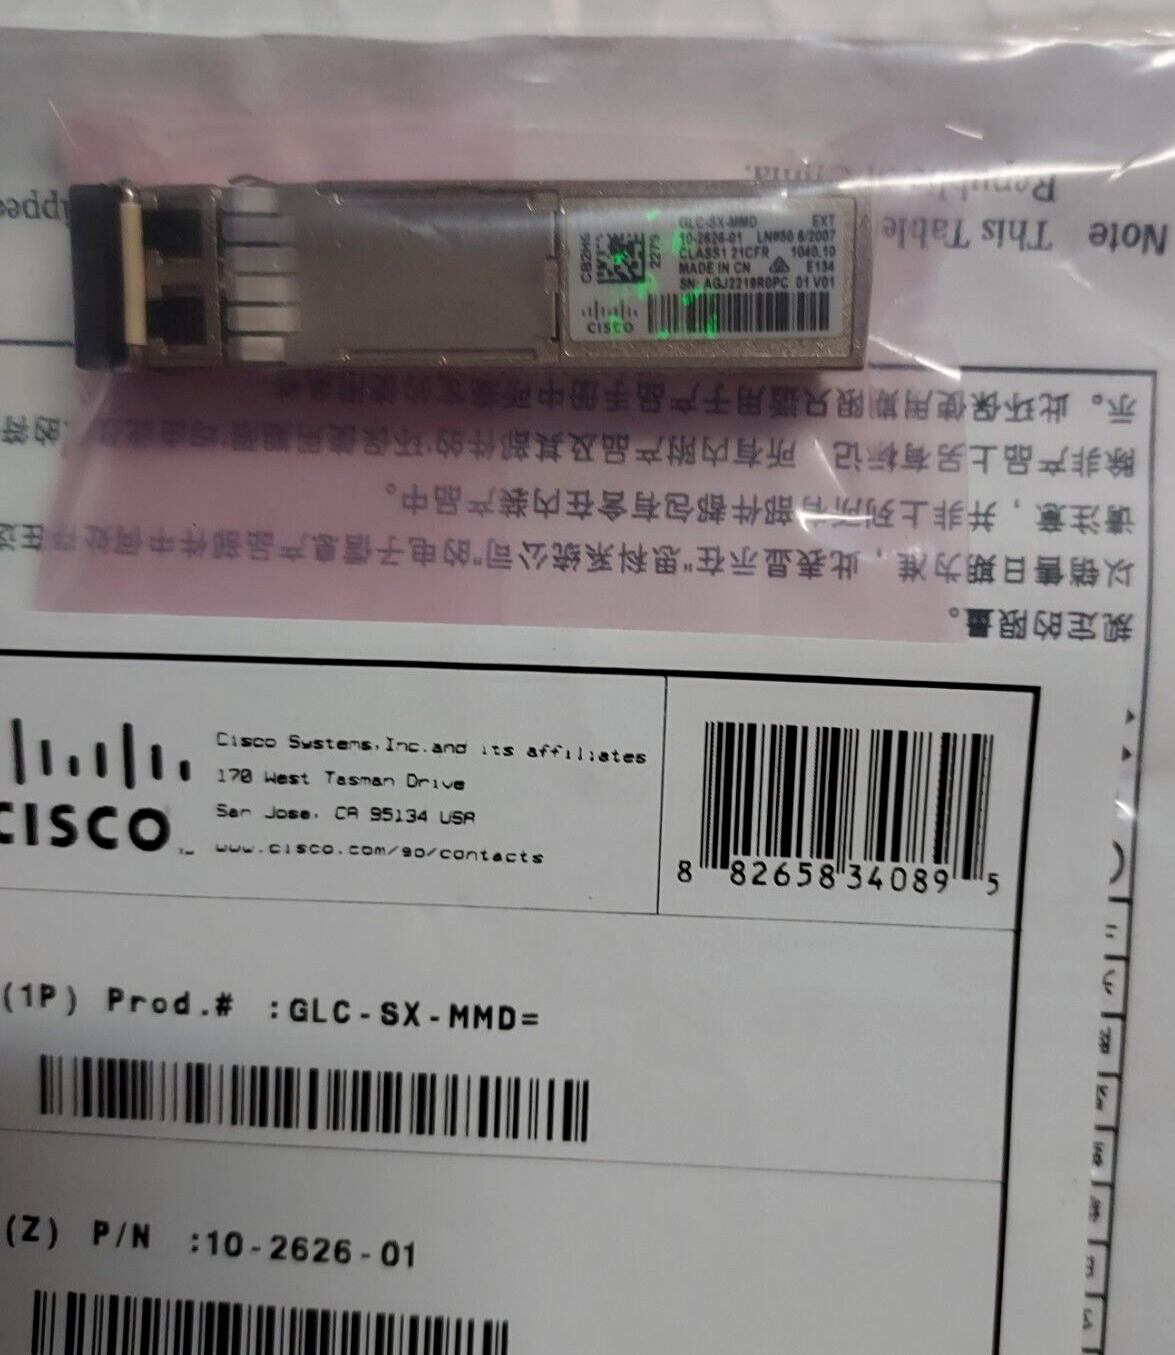 New Cisco GLC-SX-MMD 10-2626-01 Genuine HOLOGRAM YR-Warranty BEWARE COUNTERFEITS